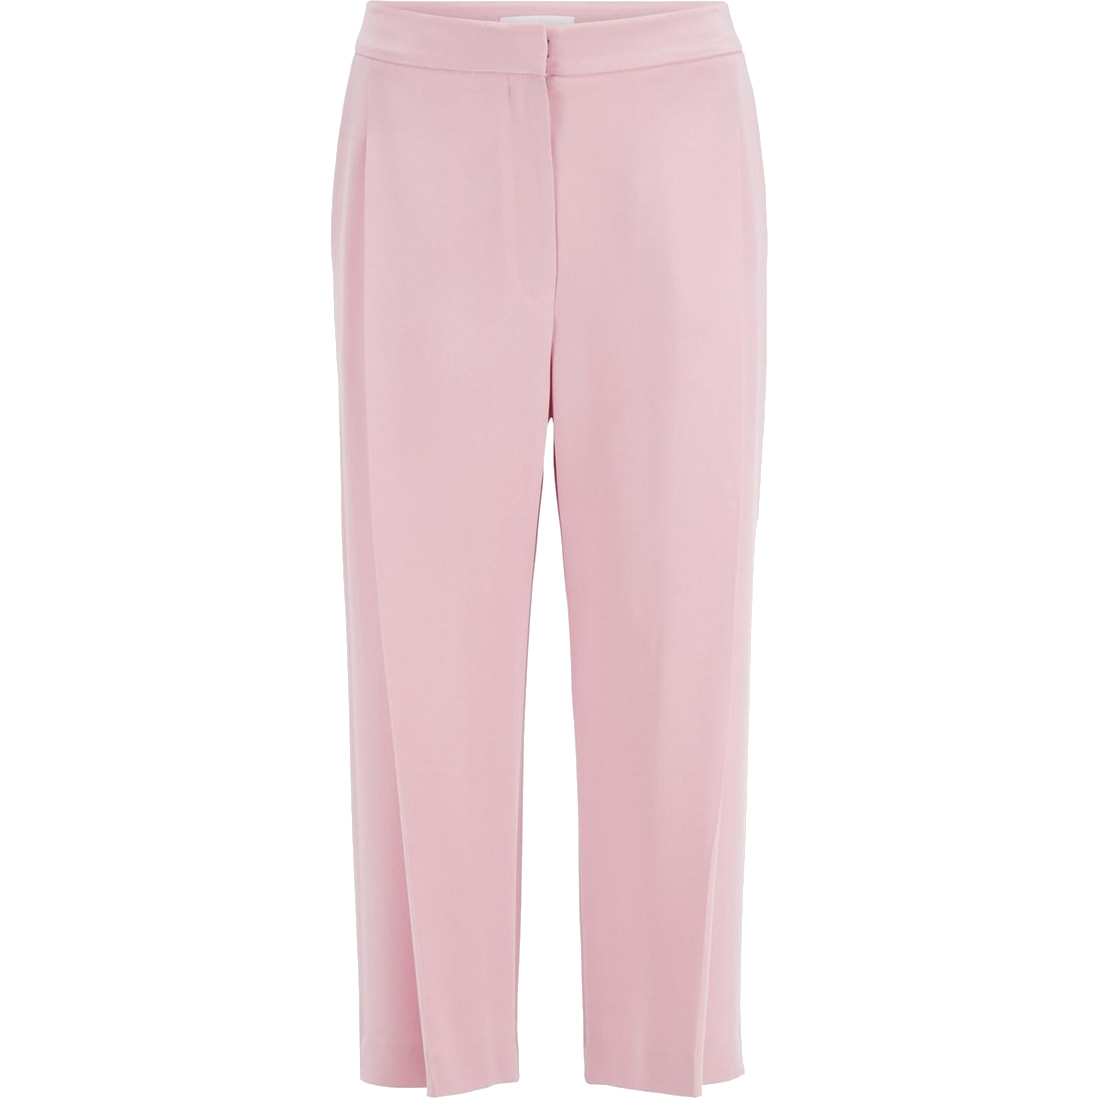 Hugo Boss 'Tibeca' Trousers in pink